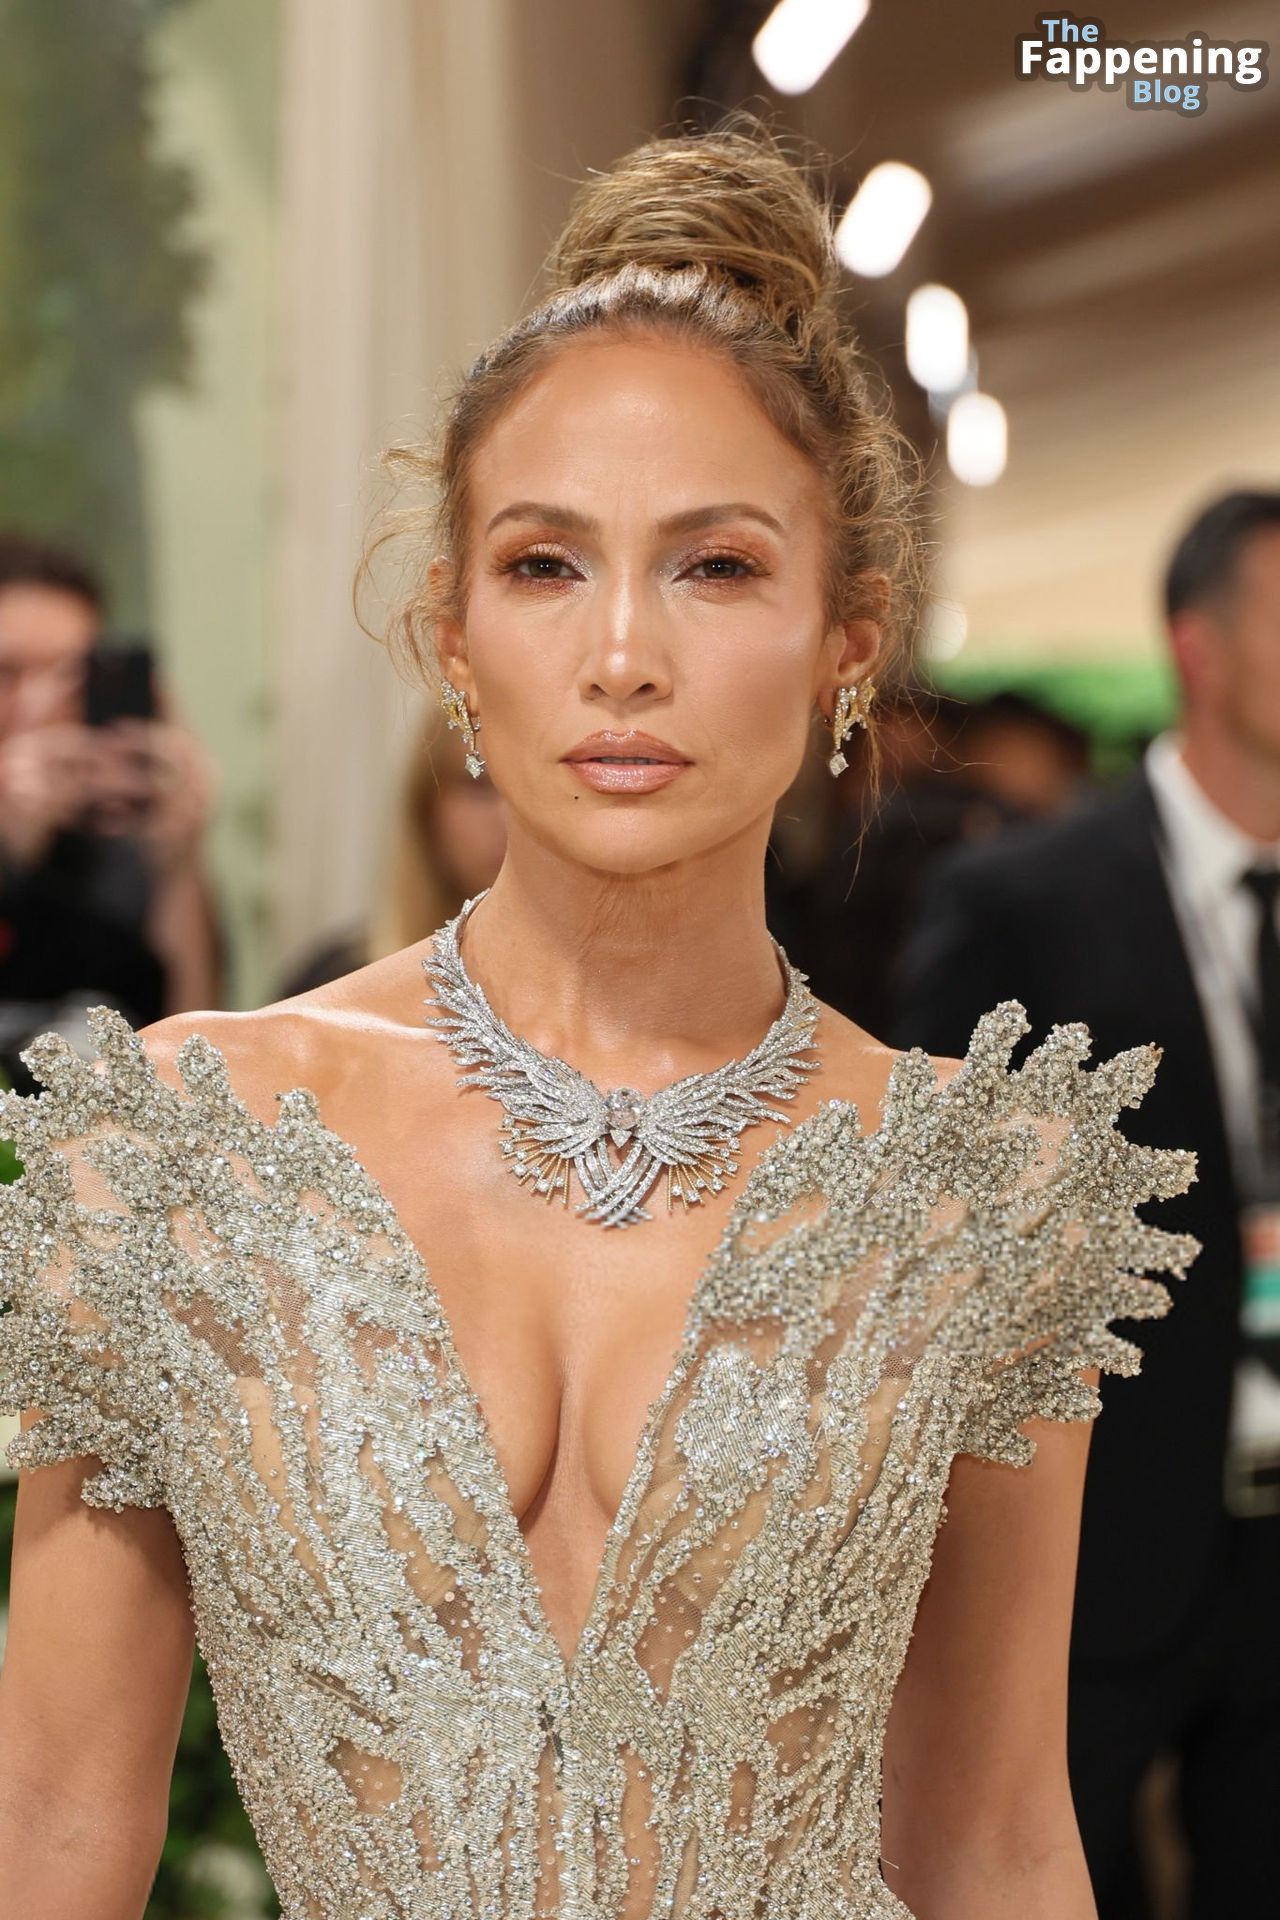 Jennifer-Lopez-Hot-16-The-Fappening-Blog.jpg